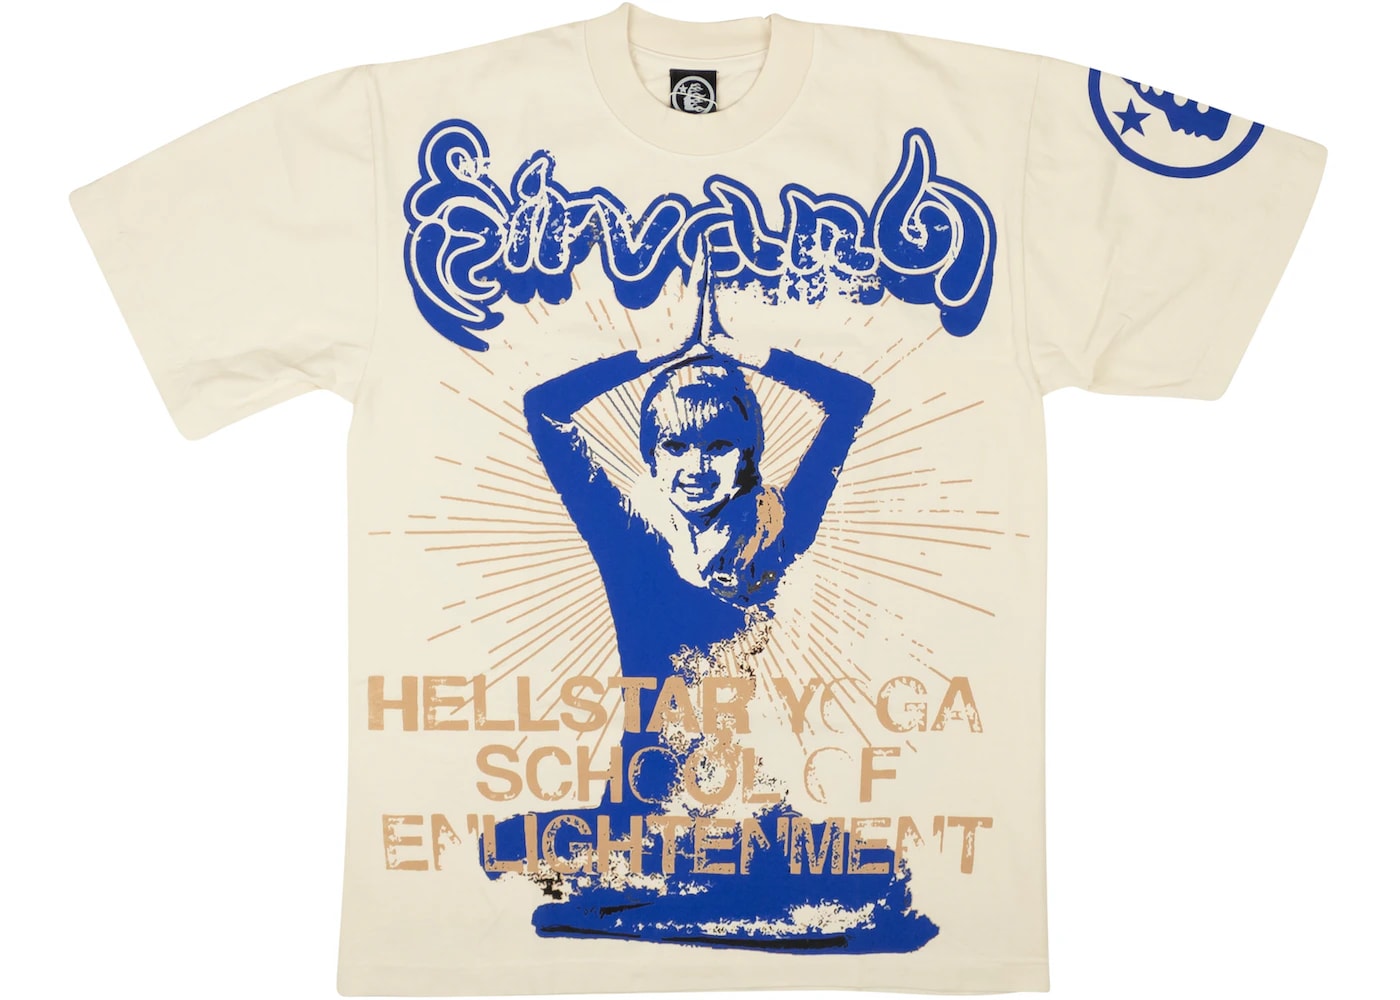 Hellstar Yoga T-shirt Cream